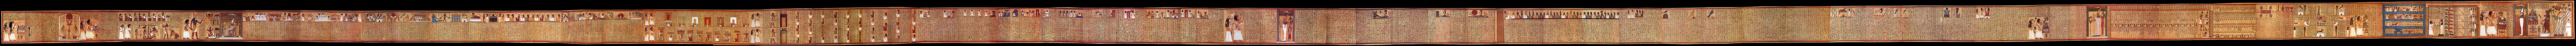 Anijev papirus iz Tebe koji prikazuje Knjigu mrtvih, oko 1250. pr. Kr. (Novo egipatsko kraljevstvo), Britanski muzej, London